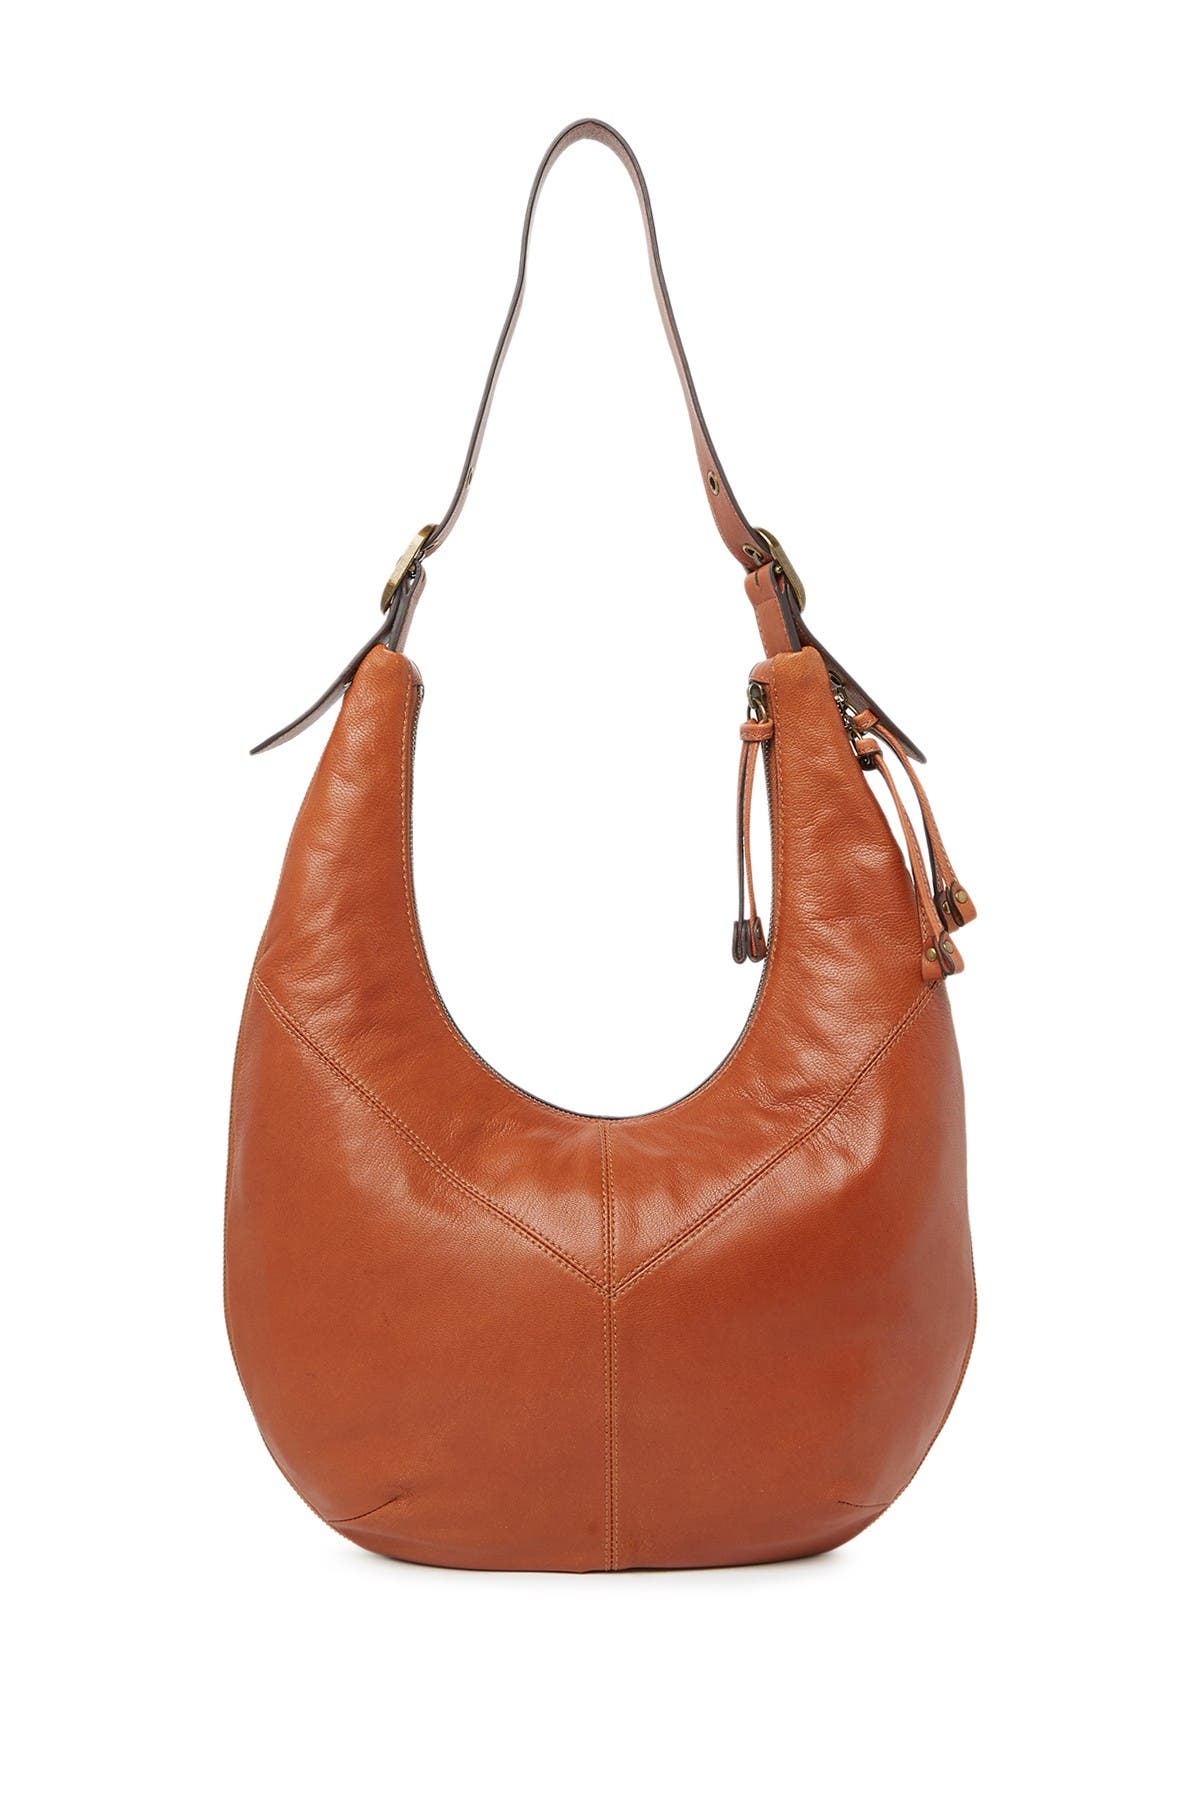 Frye Gina Leather Hobo Bag In Tan